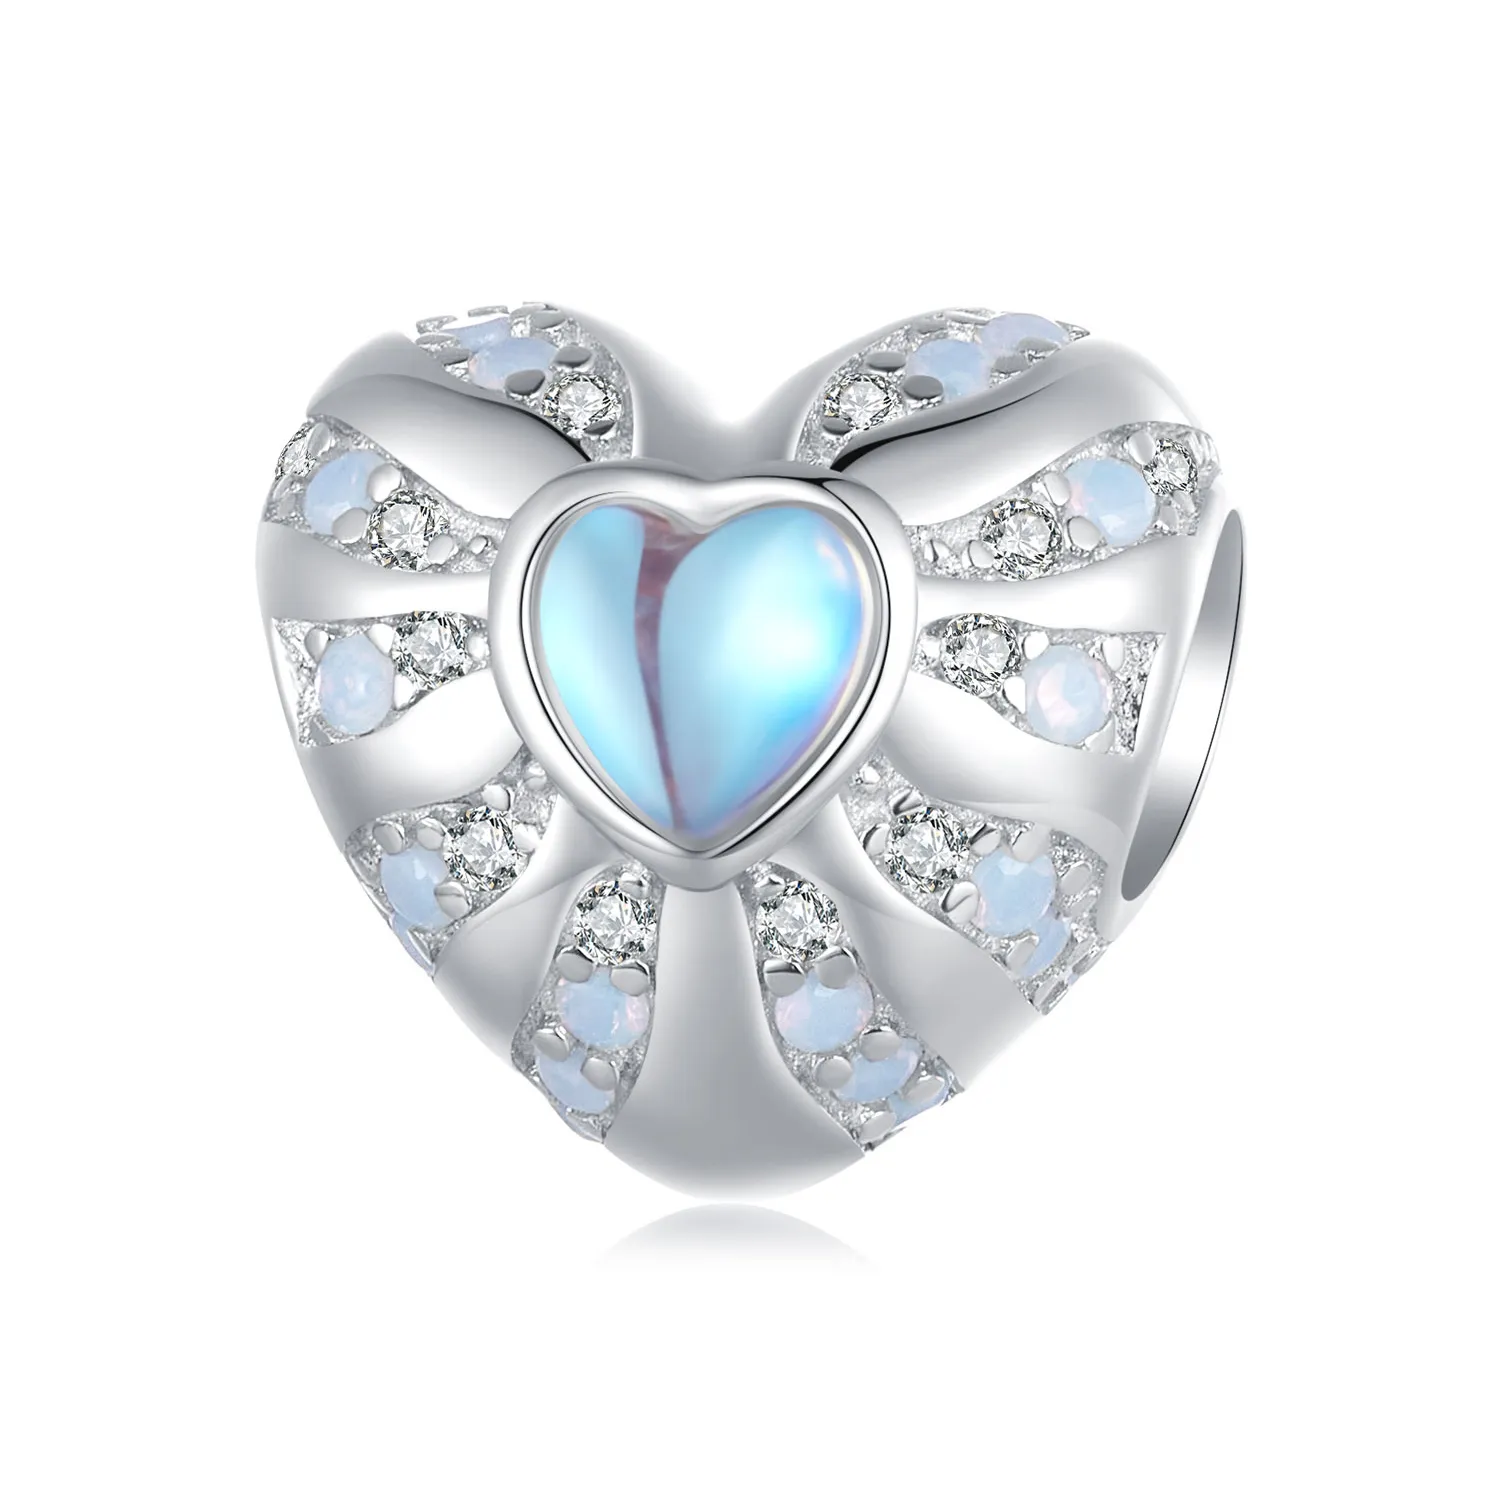 Pandora Stil Inimă de Iluzie Charm - BSC918